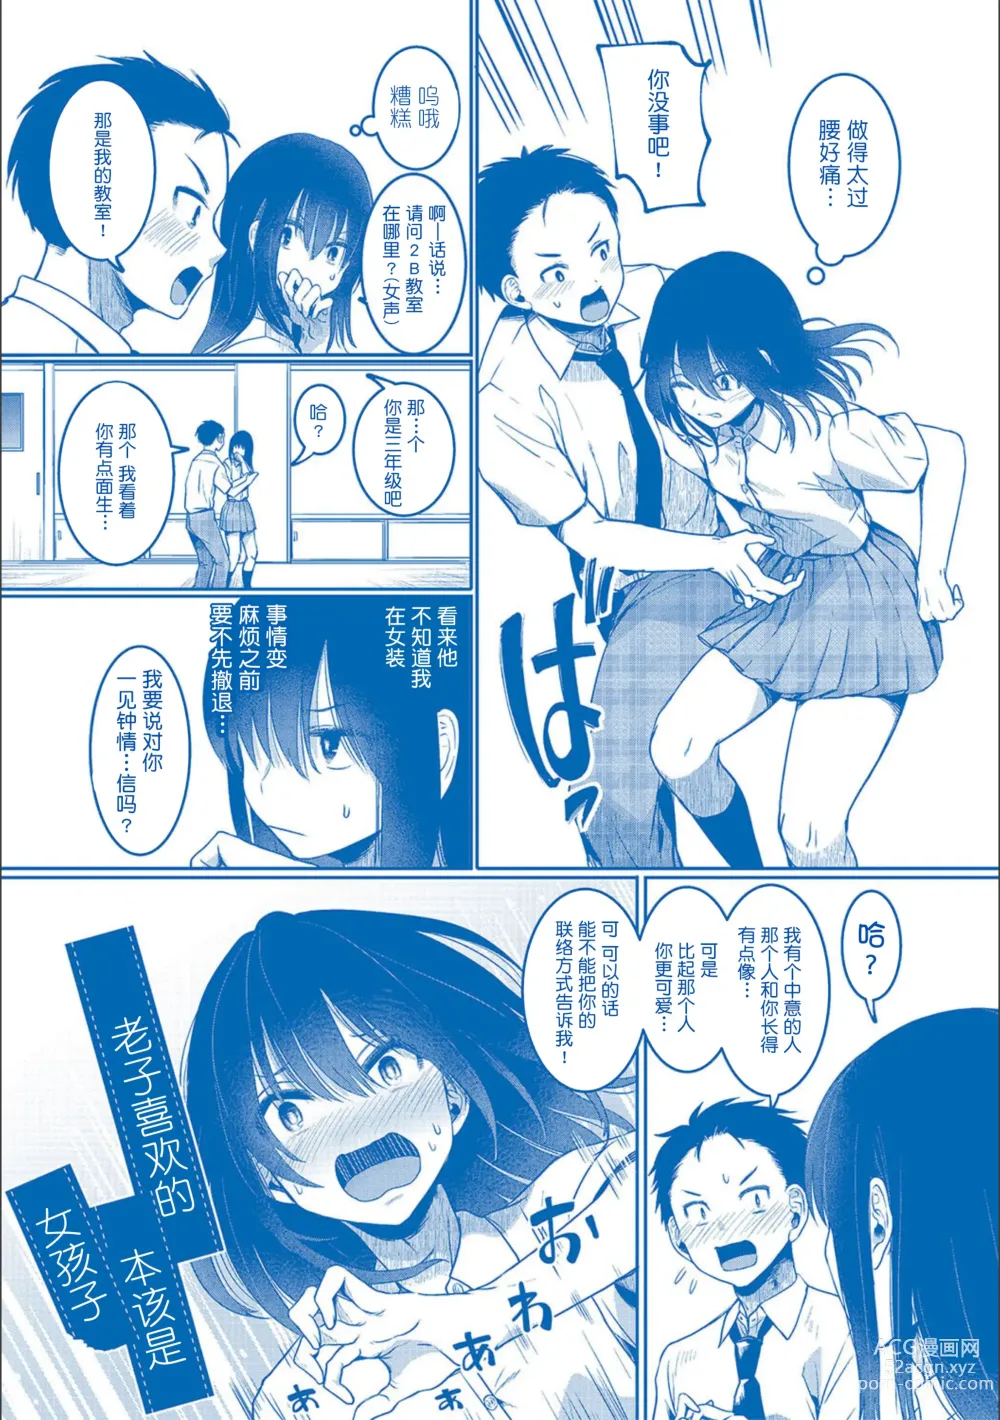 Page 210 of manga Watashi wa Onnanoko ga Suki datta Hazu nano ni - But I fell in with something different.